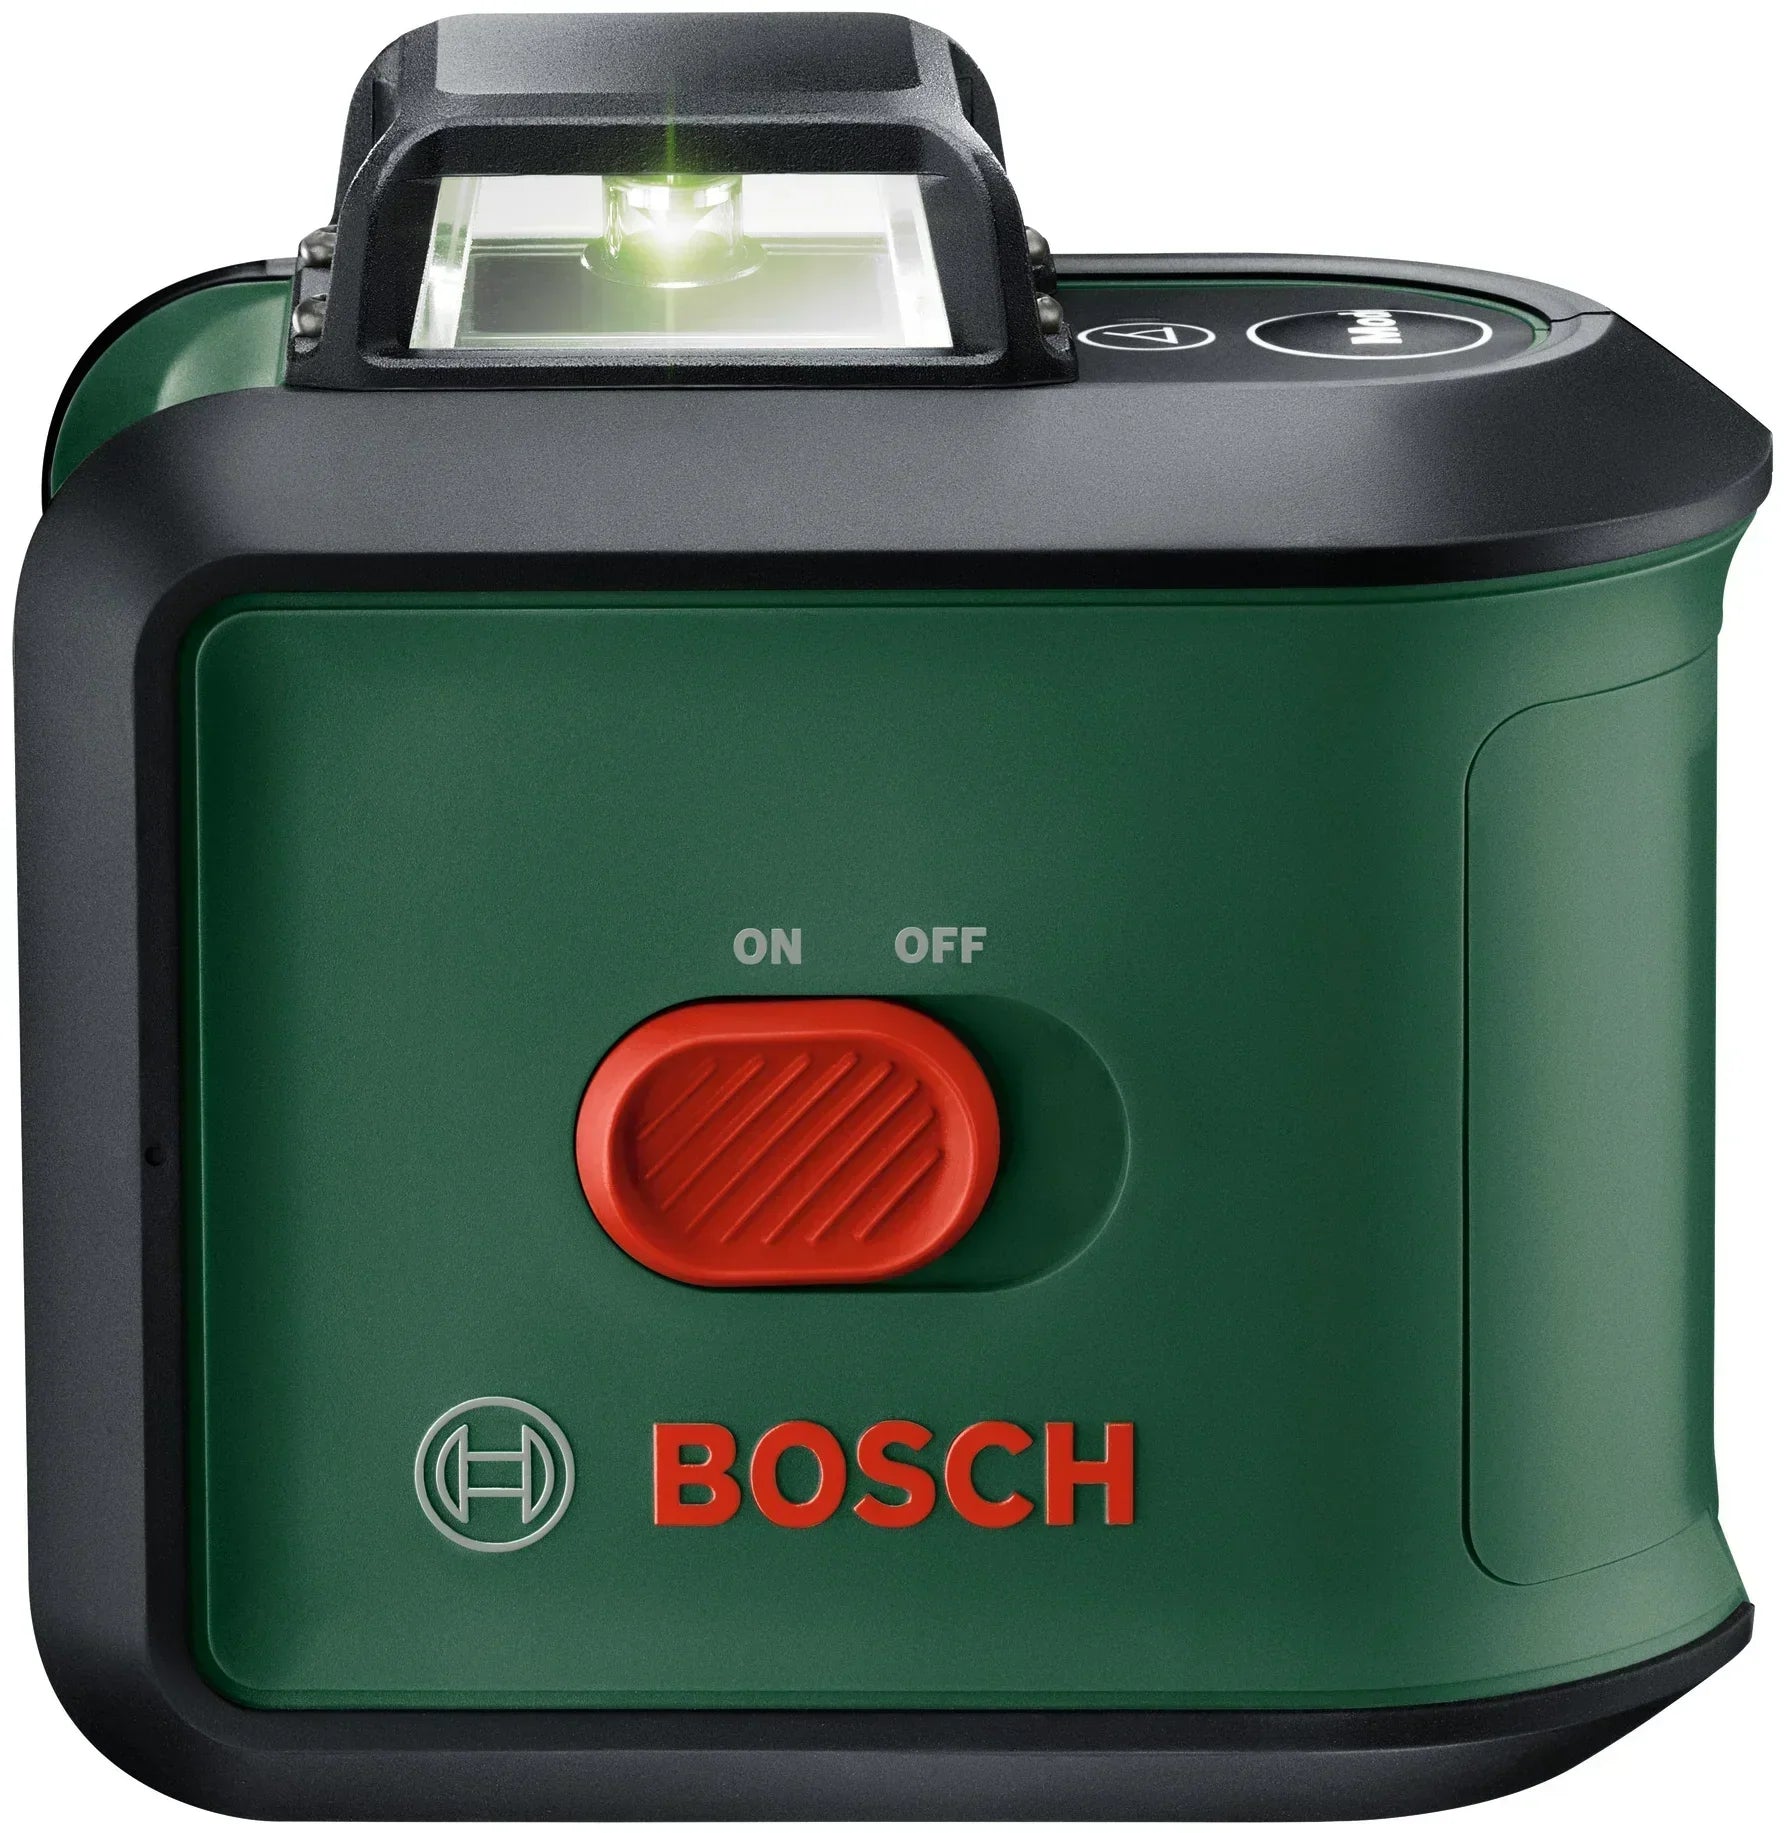 Bosch DIY UniversalLevel 360 Basic 0603663E00 Power Tool Services